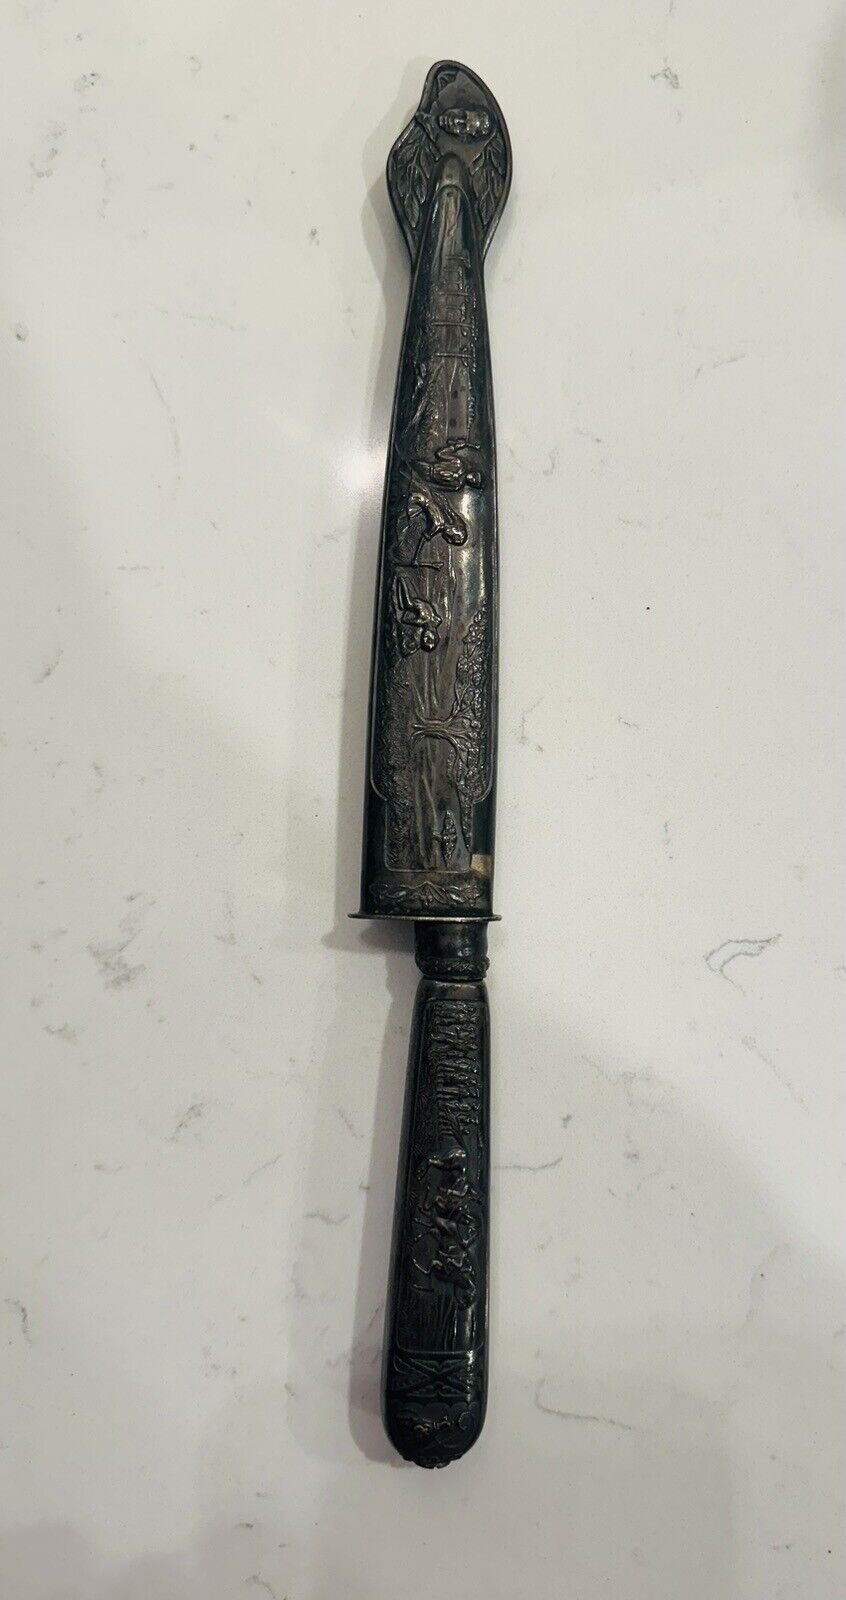 Original Vintage Eberle Gaucho Knife and Sheath - Inox Blade